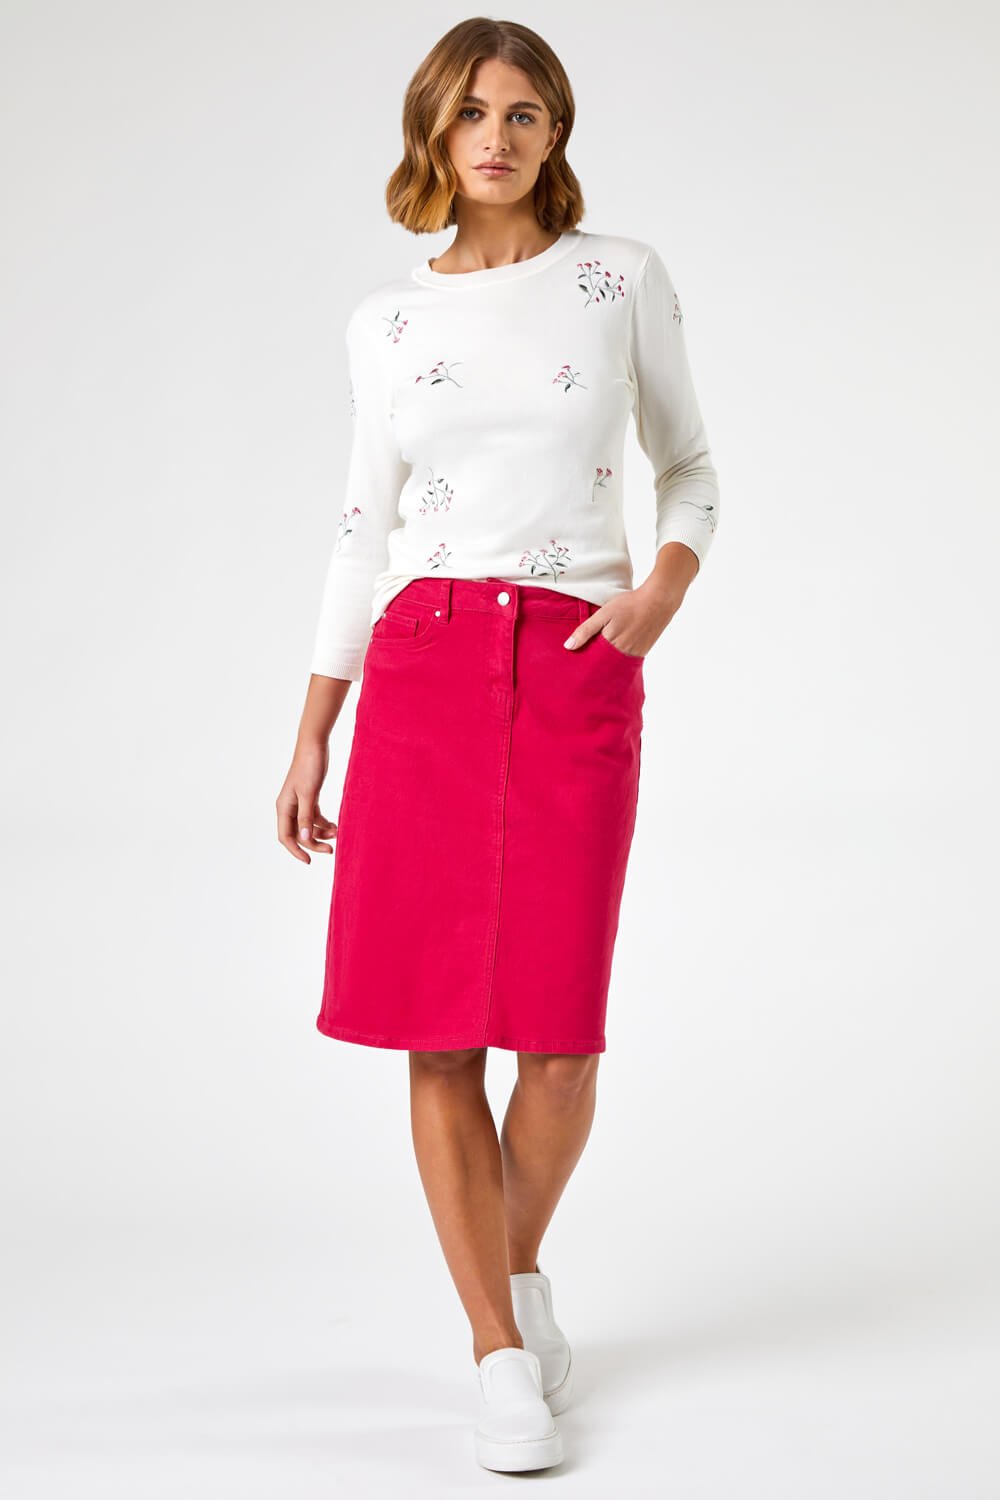 PINK Cotton Denim Stretch Skirt, Image 4 of 4